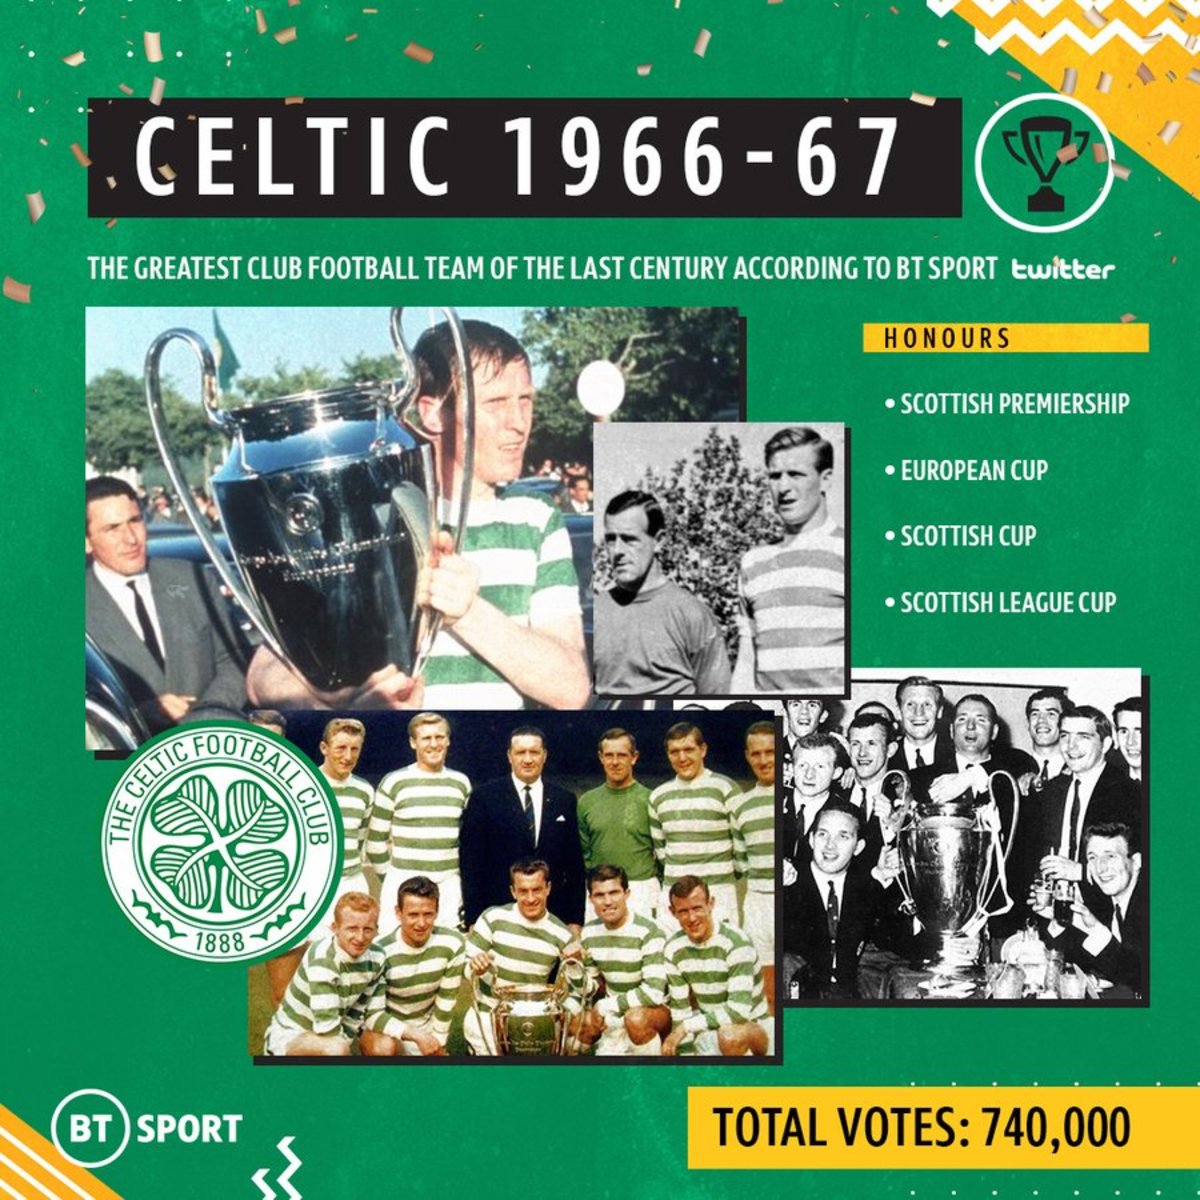 Scottish club Celtic, winning the quadruple in 1966/1967 season. 